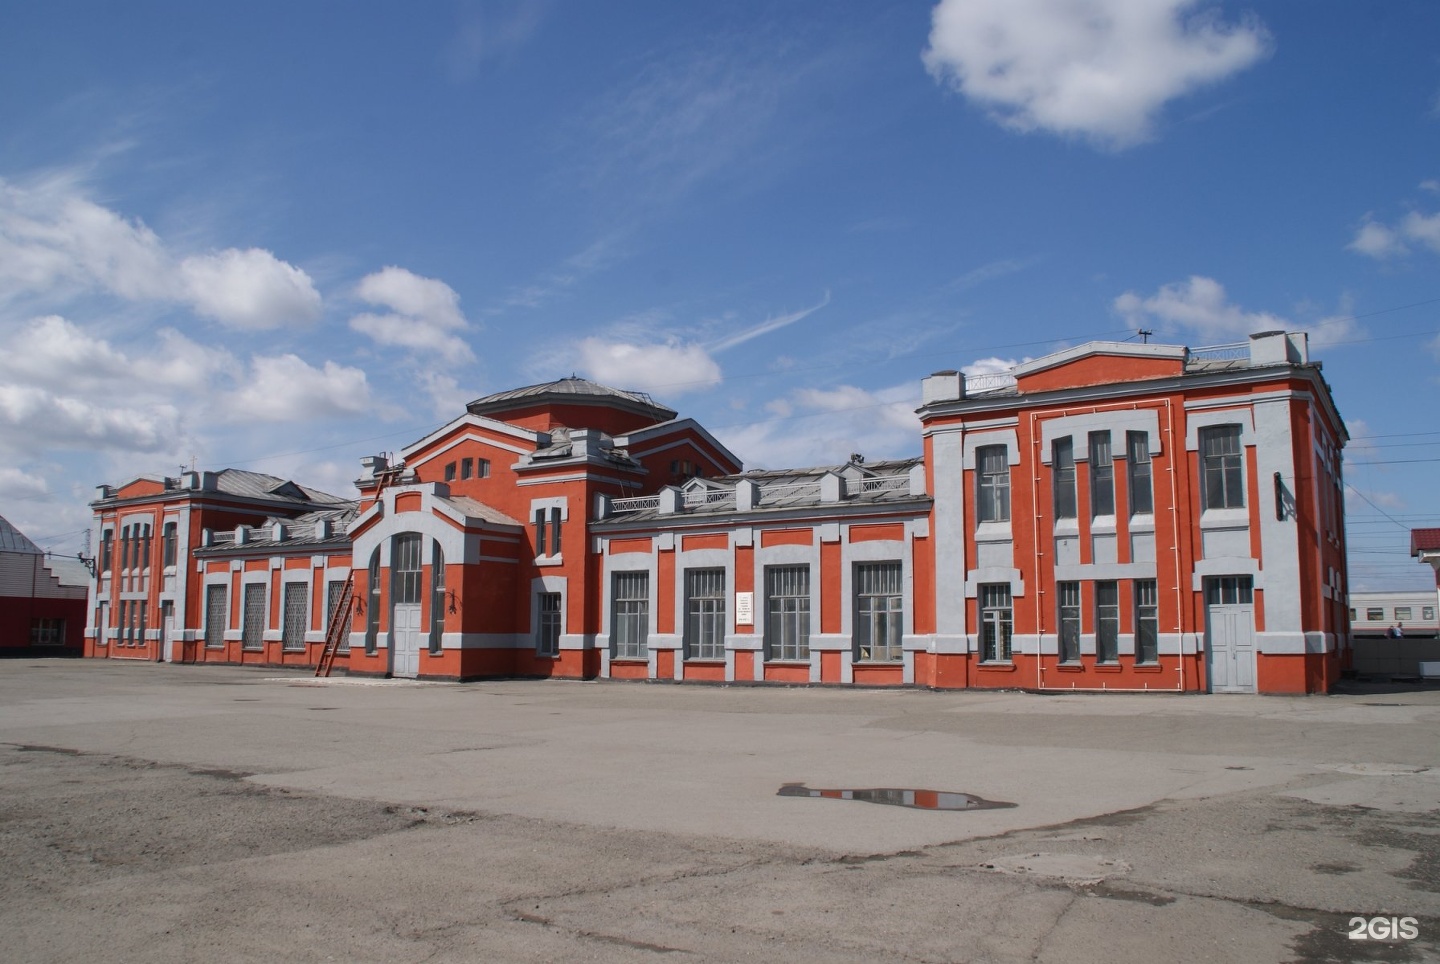 Жд барнаул сайт. Вокзал Барнаул, Барнаул. Железнодорожный вокзал Барнаул. Главный ж д вокзал Барнаул. Старый Железнодорожный вокзал (Барнаул).